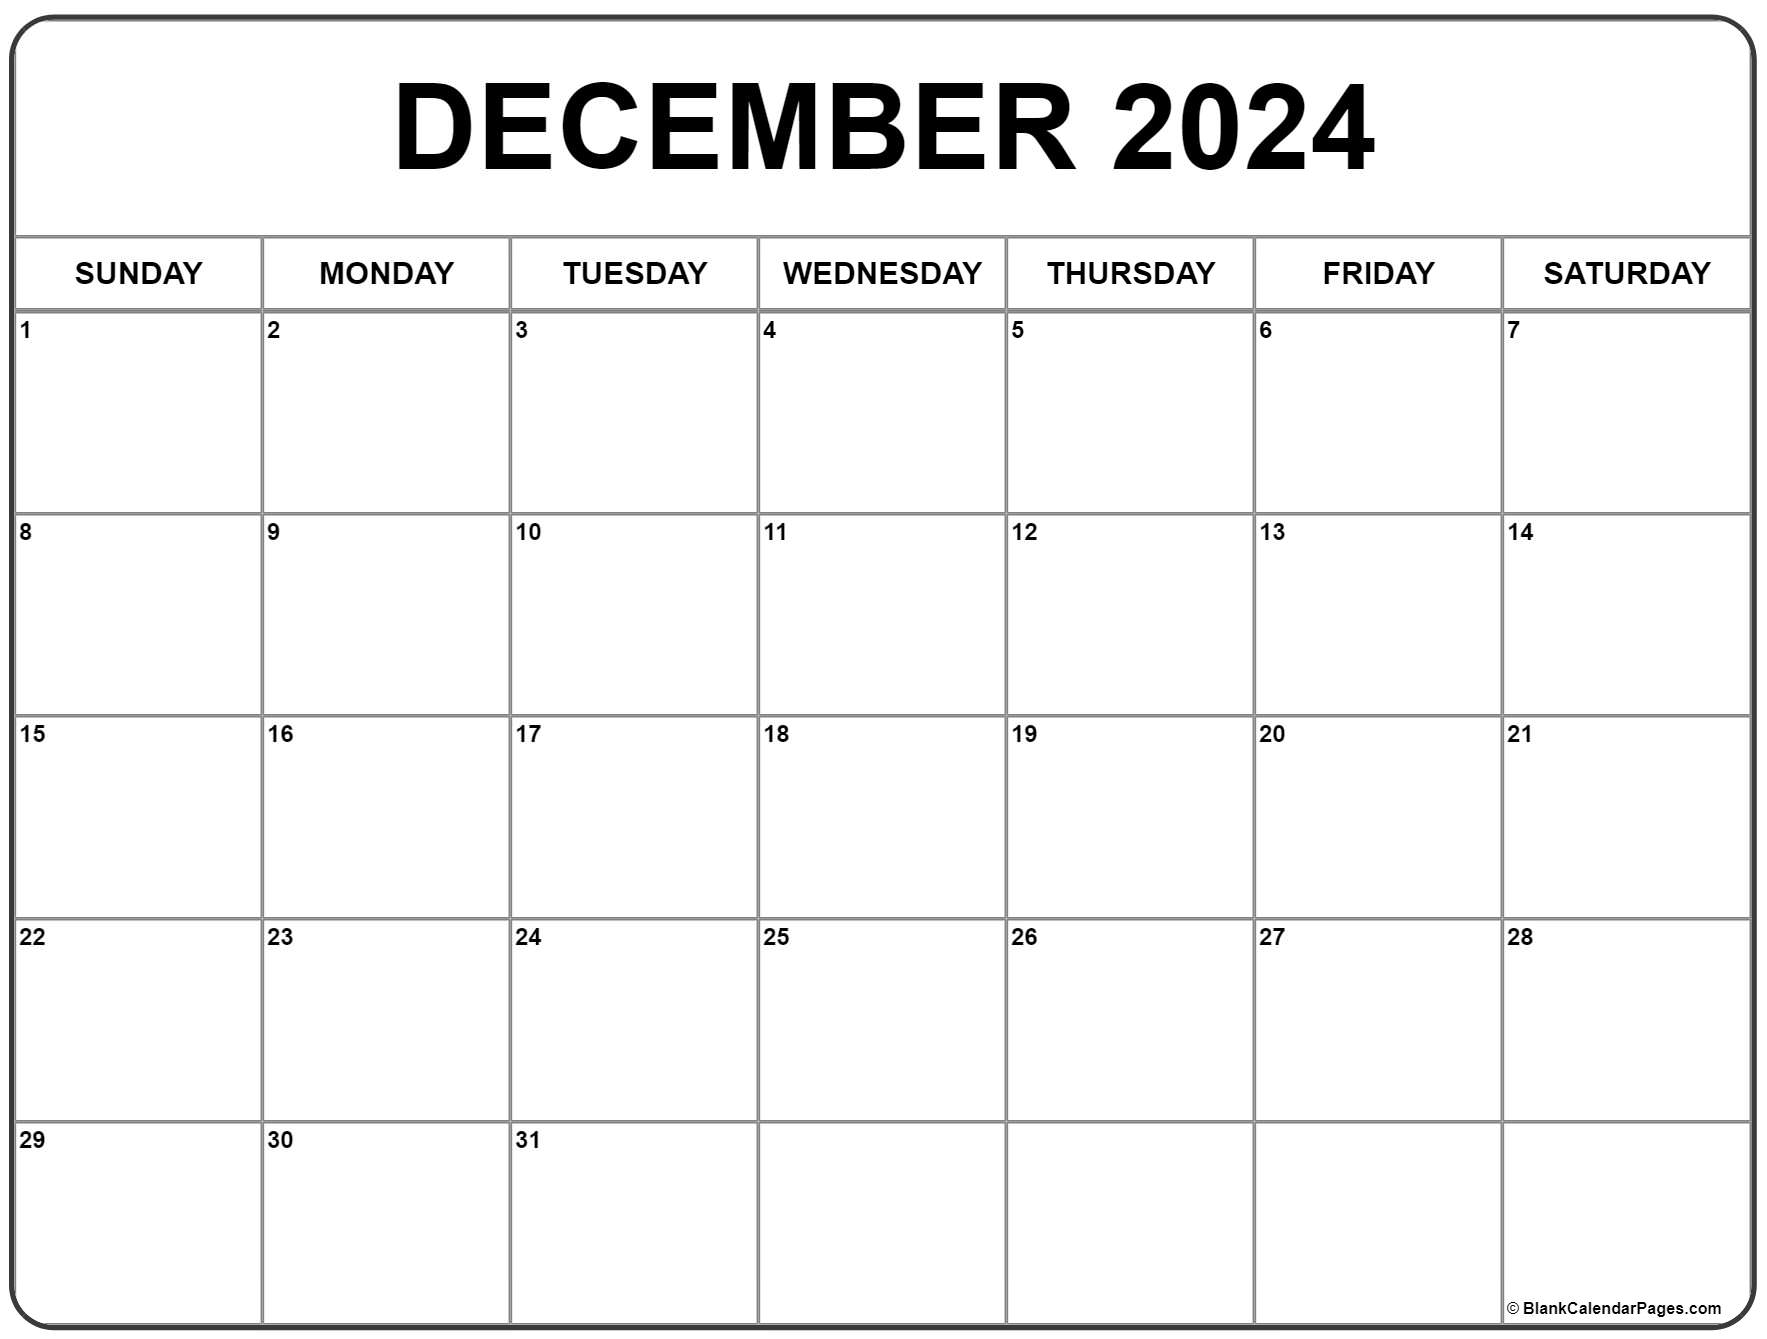 Dec 2022 Calendar Printable December 2022 Calendar | Free Printable Calendar Templates